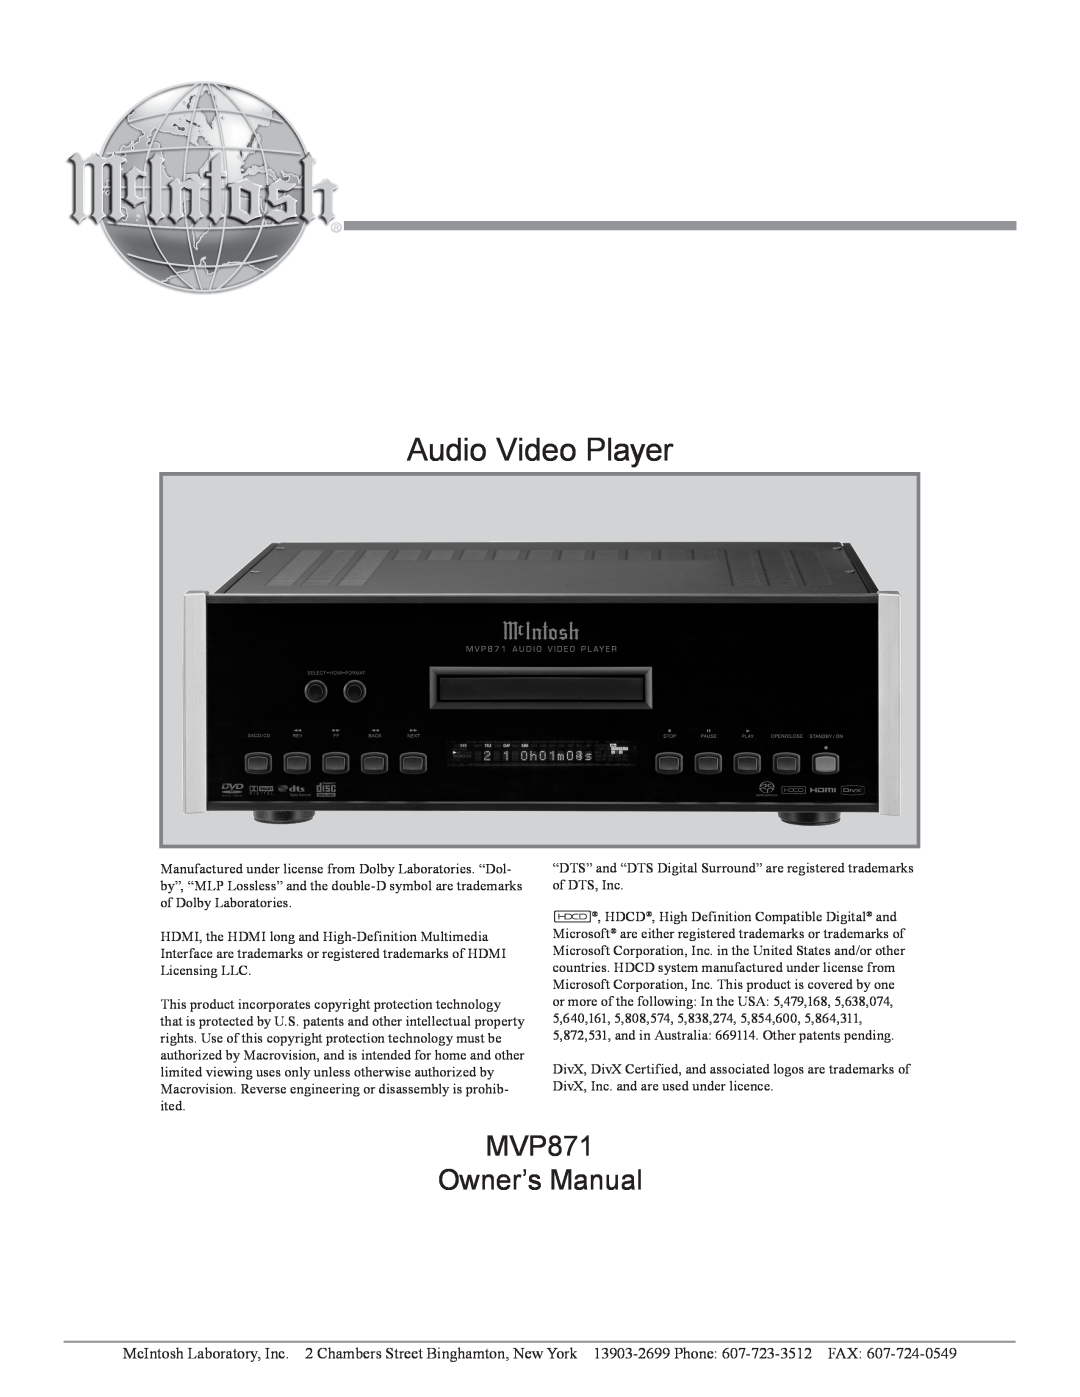 McIntosh owner manual Audio Video Player, MVP871 Owner’s Manual 